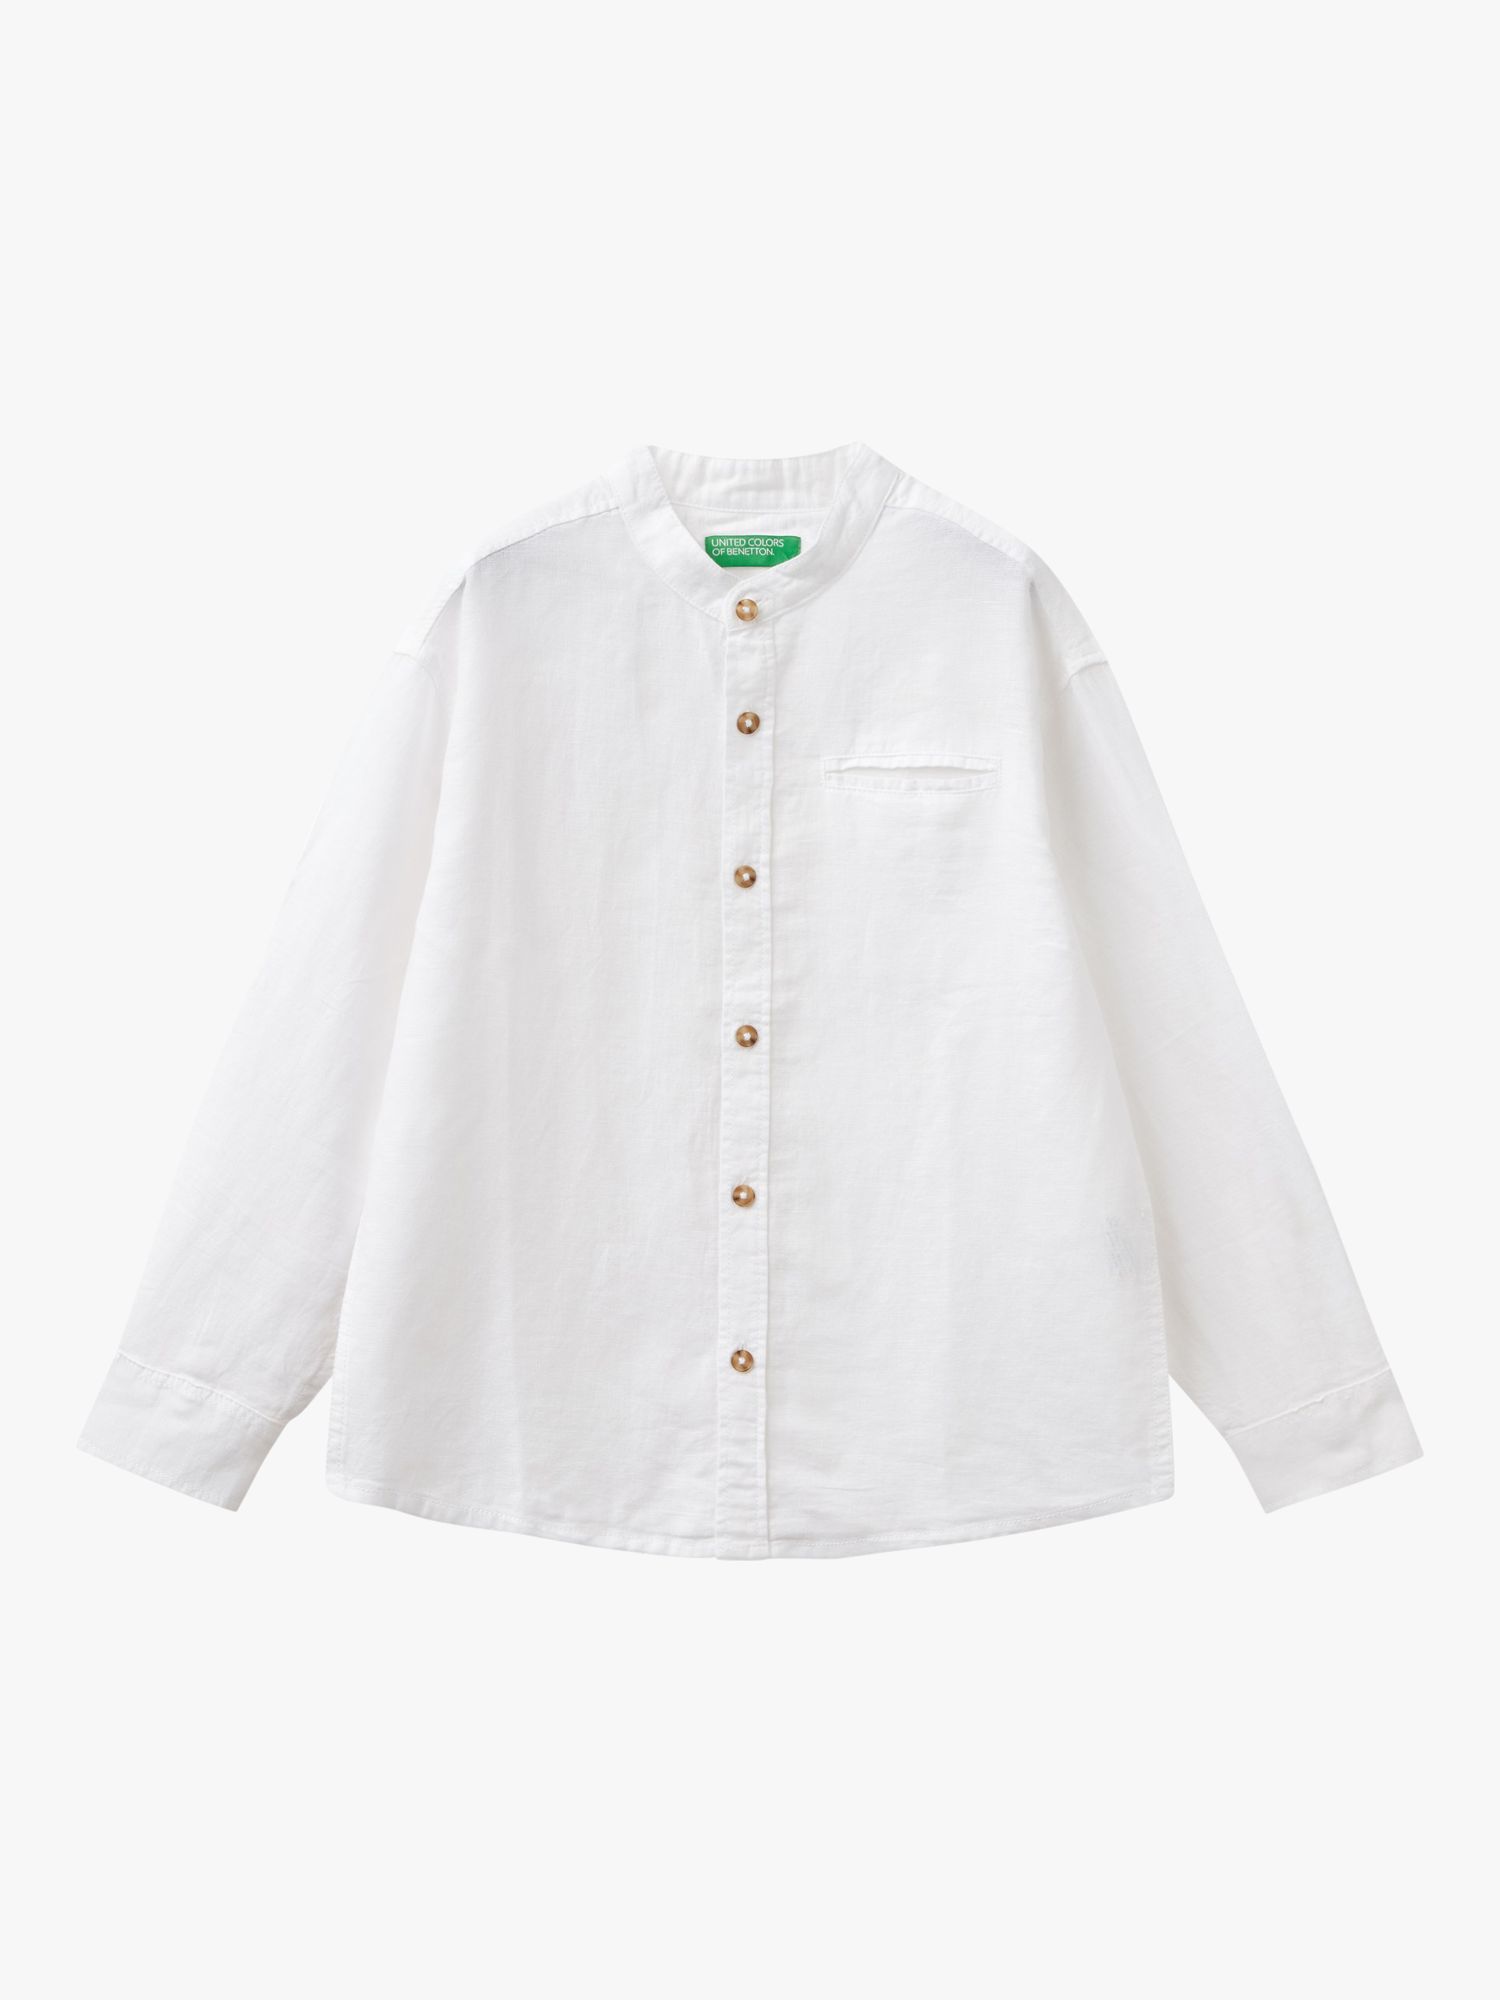 Benetton Kids' Linen Blend Long Sleeve Grandad Collar Shirt, Optical White, 6-7 years